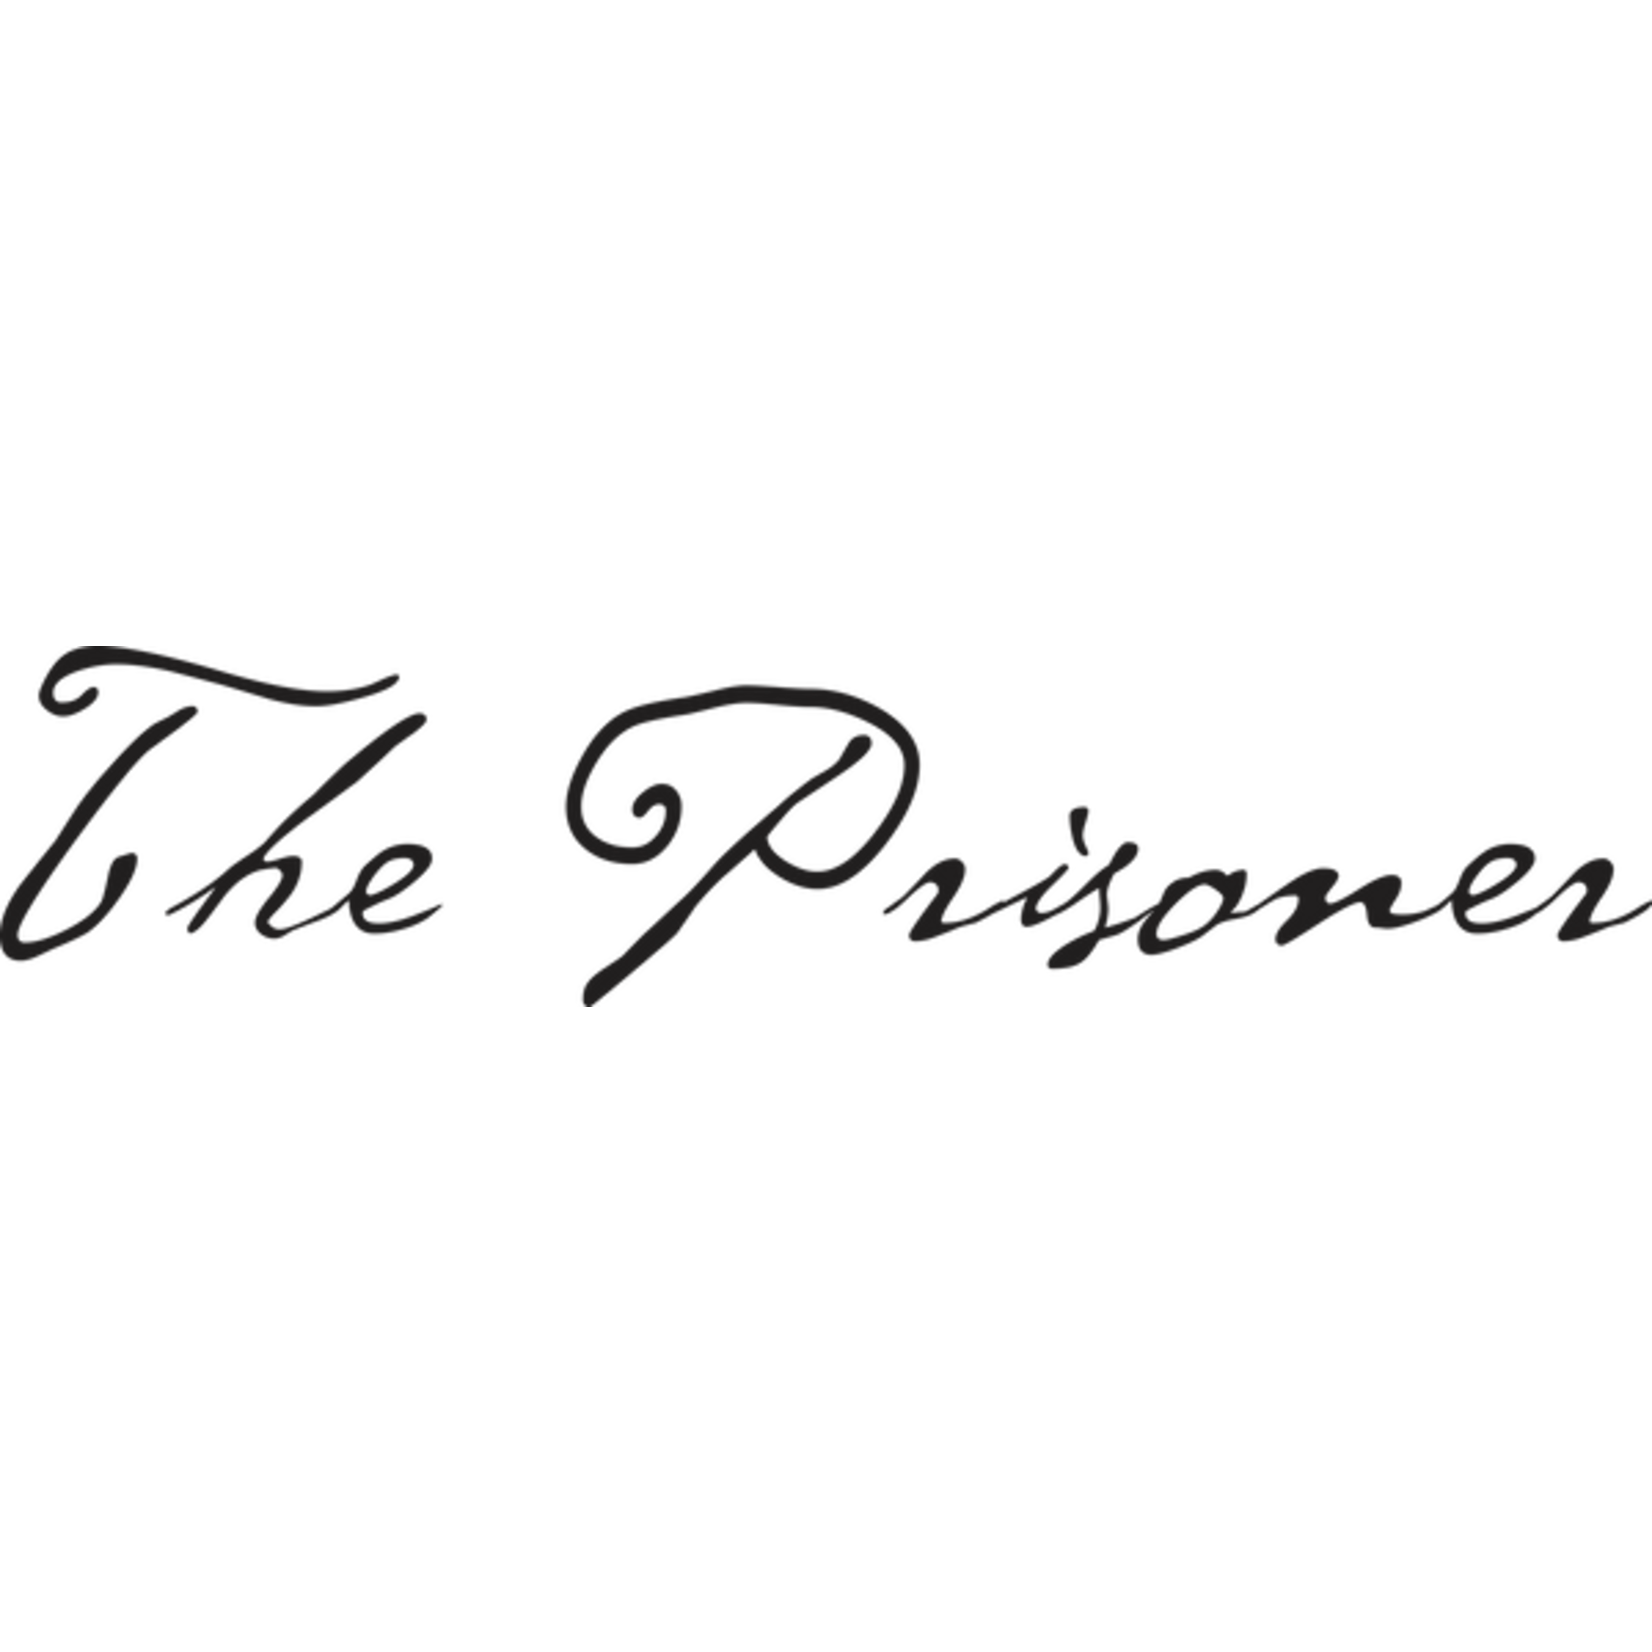 The Prisoner Wine Company The Prisoner Pinot Noir 2021 Sonoma Coast California